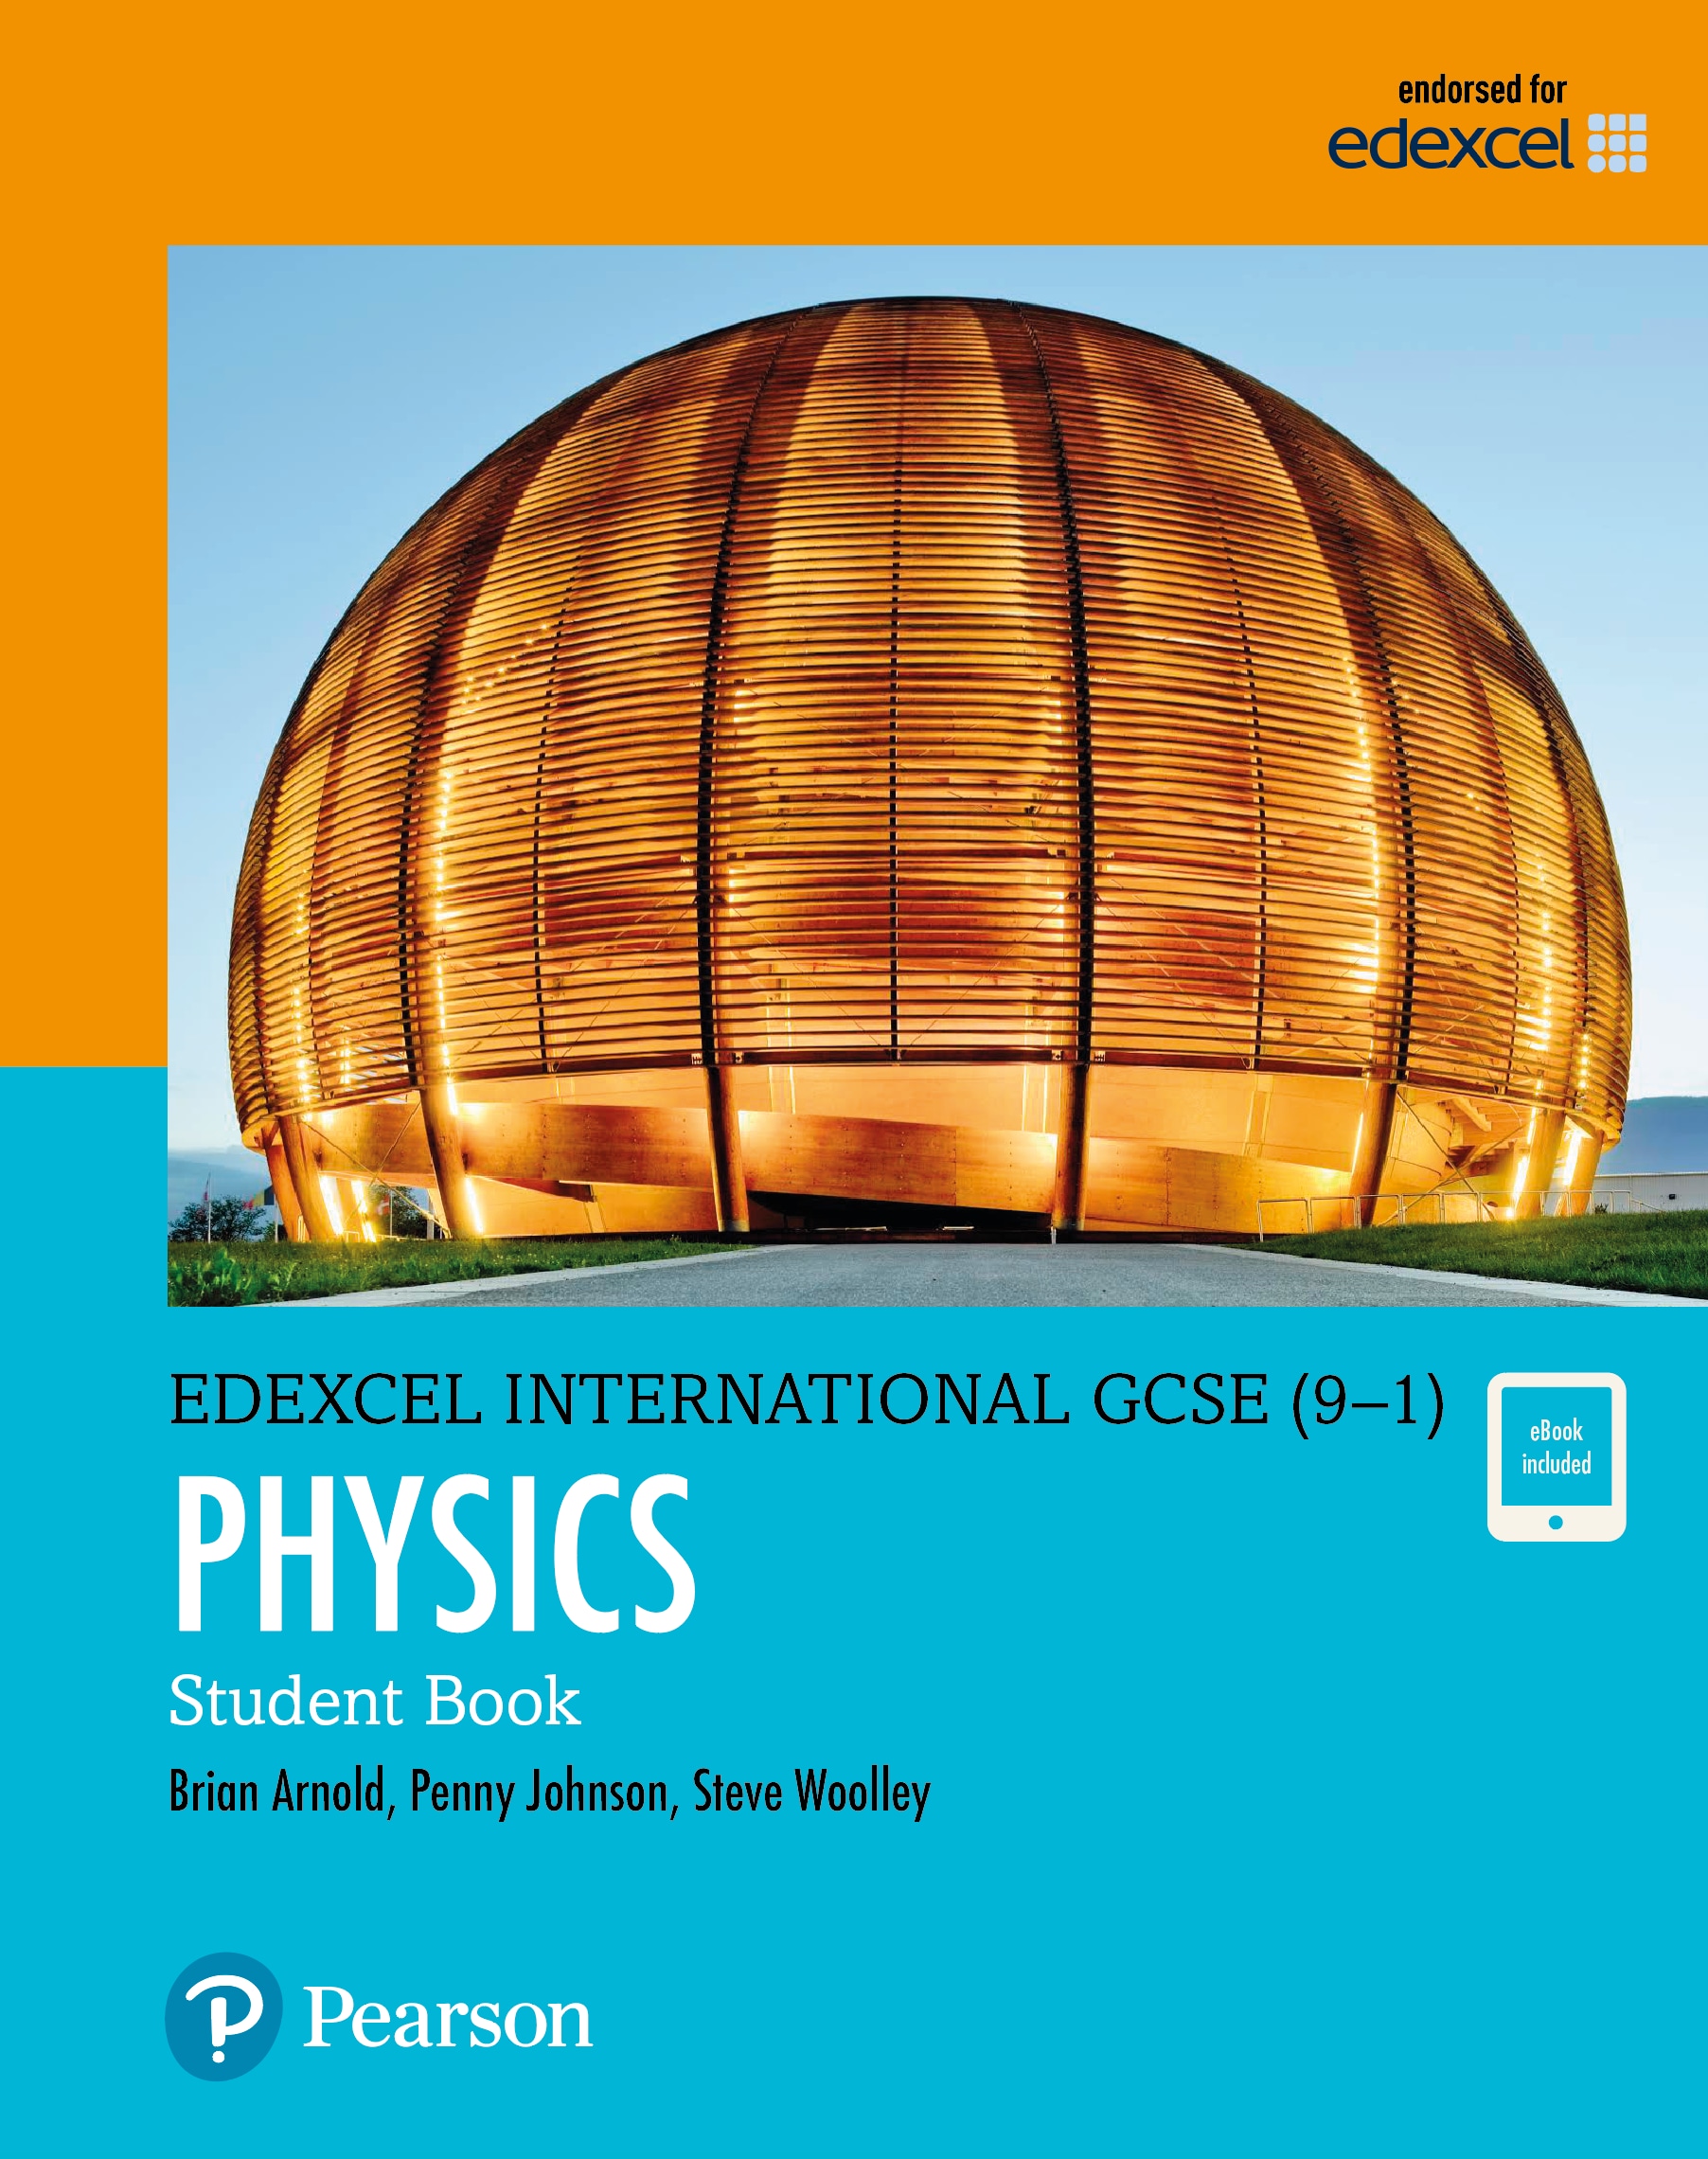 Physics Student Book sample